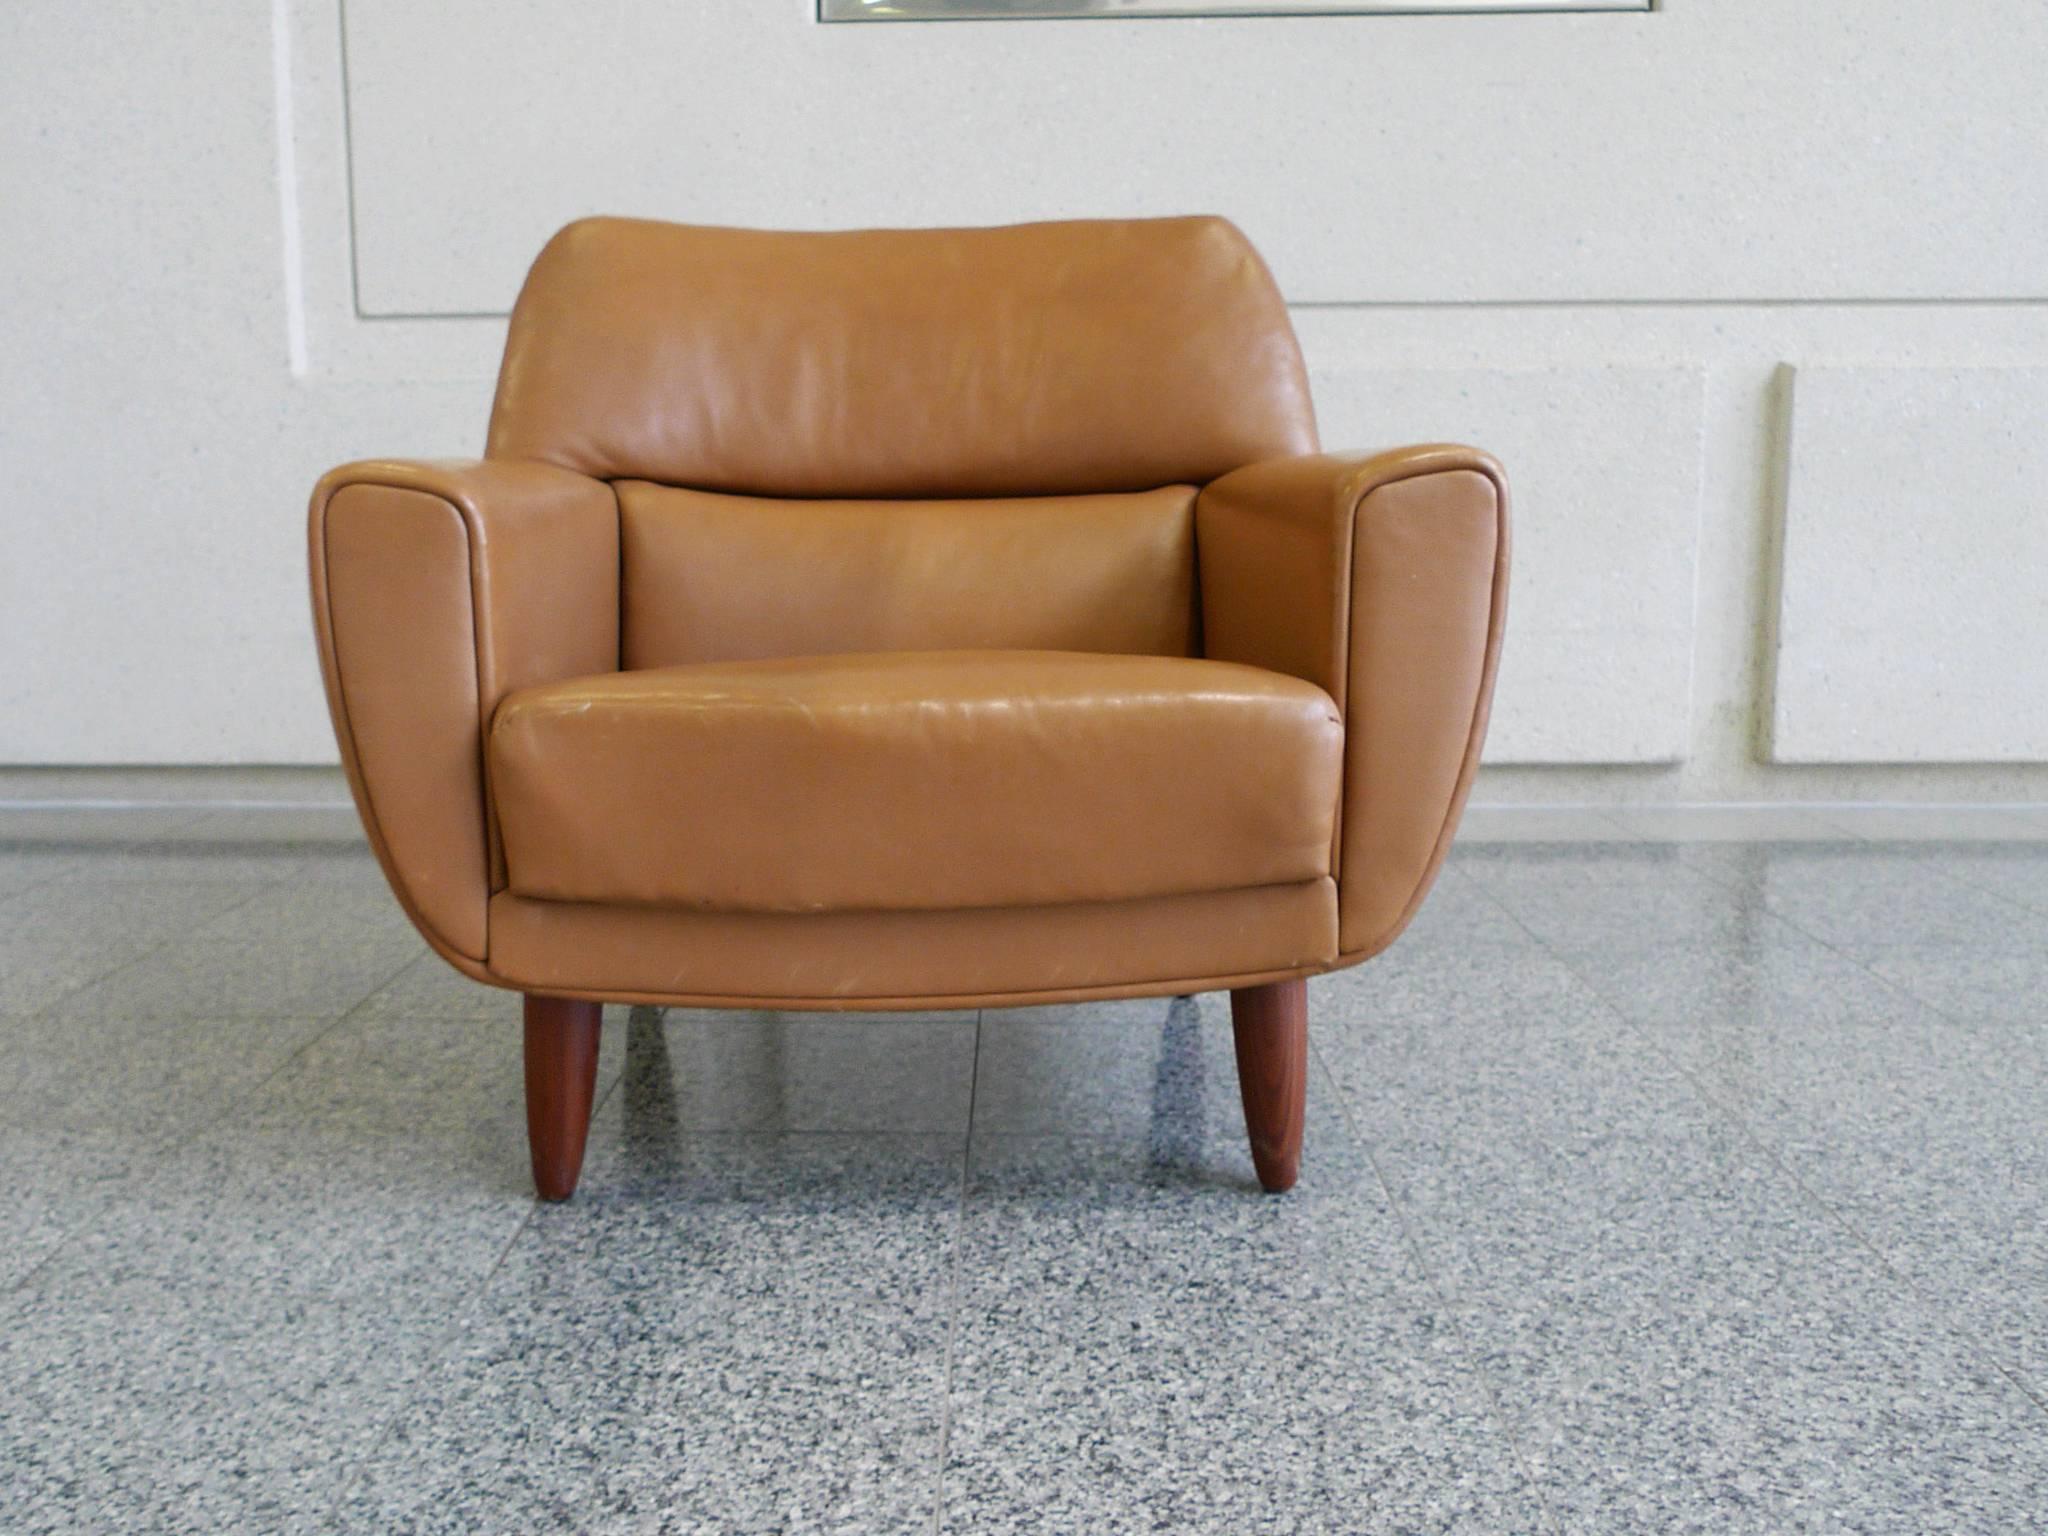 20th Century Danish Midcentury Tan Leather Lounge Chair by Illum Wikkelsø